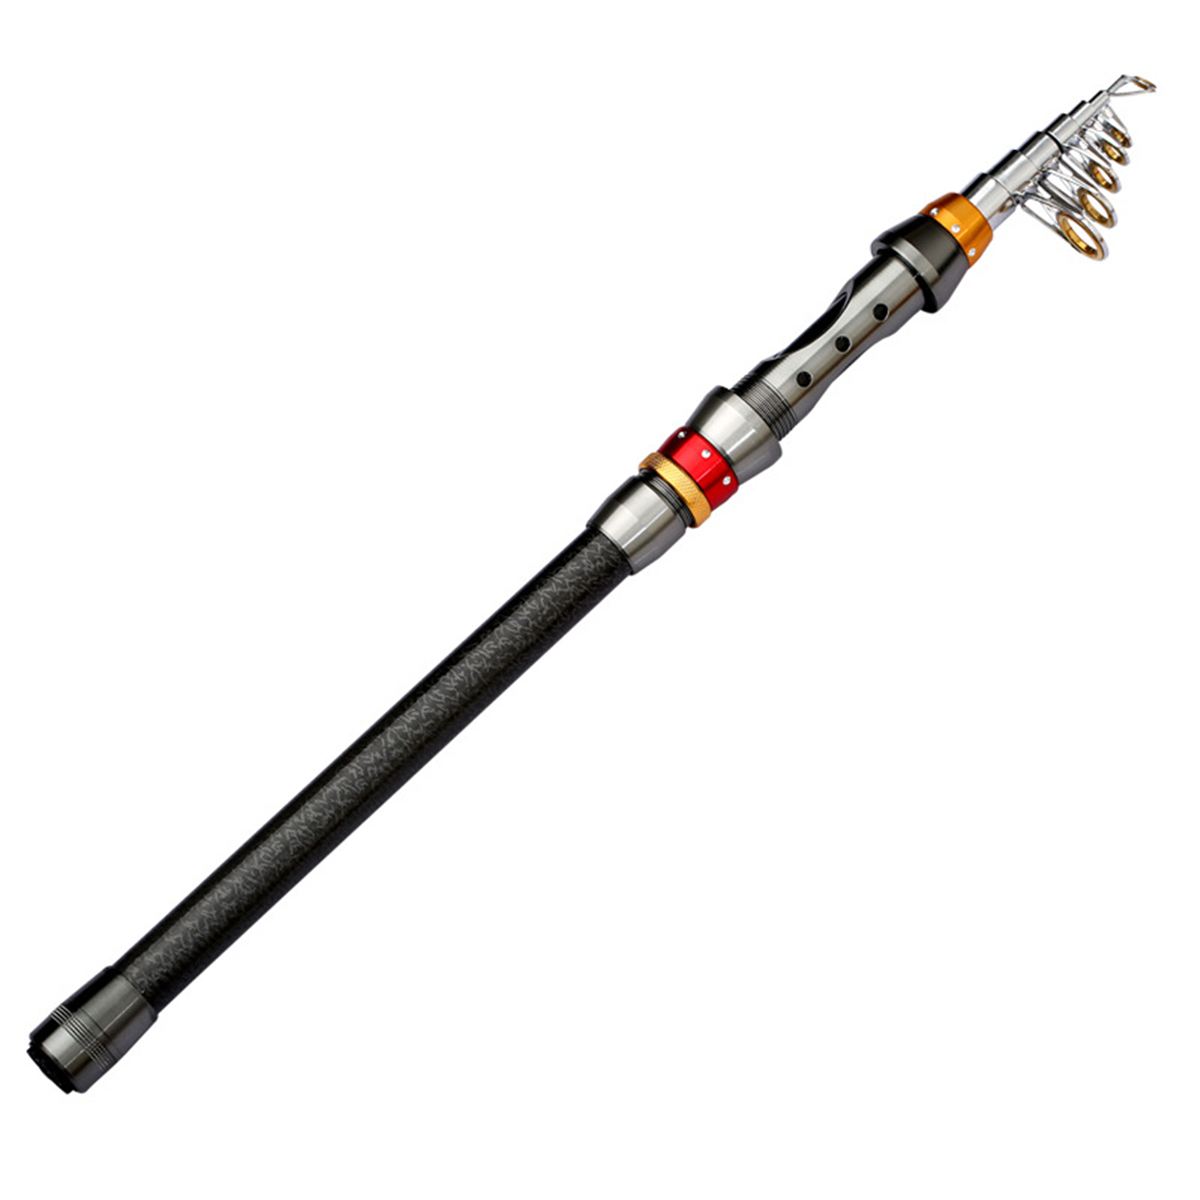 

ZANLURE 1.8/3/3.6m Fishing Rod Ultralight Carbon Fiber Telescopic Spinning Pole Fishing Tools